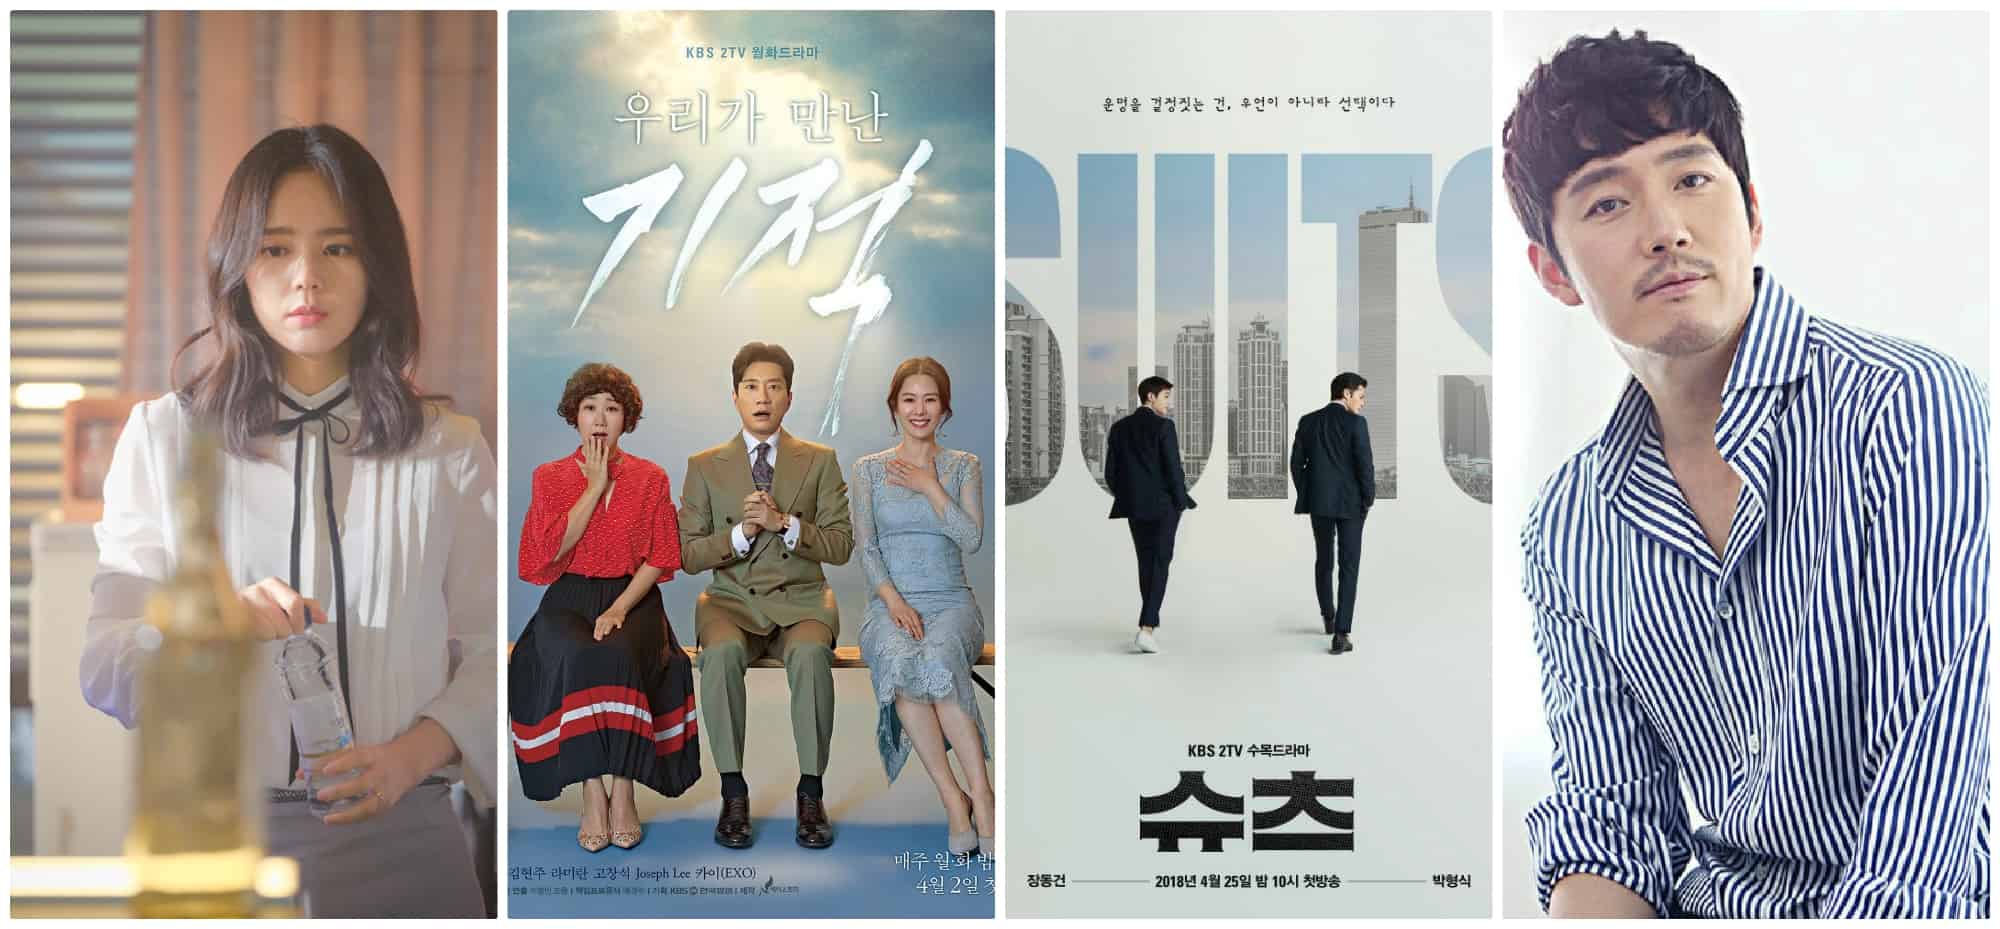 4 nuevos dramas coreanos en abril de 2020 con Park Hyung Sik, Jang Dong Gun, Kim Myung Min, Jang Hyuk y otros!